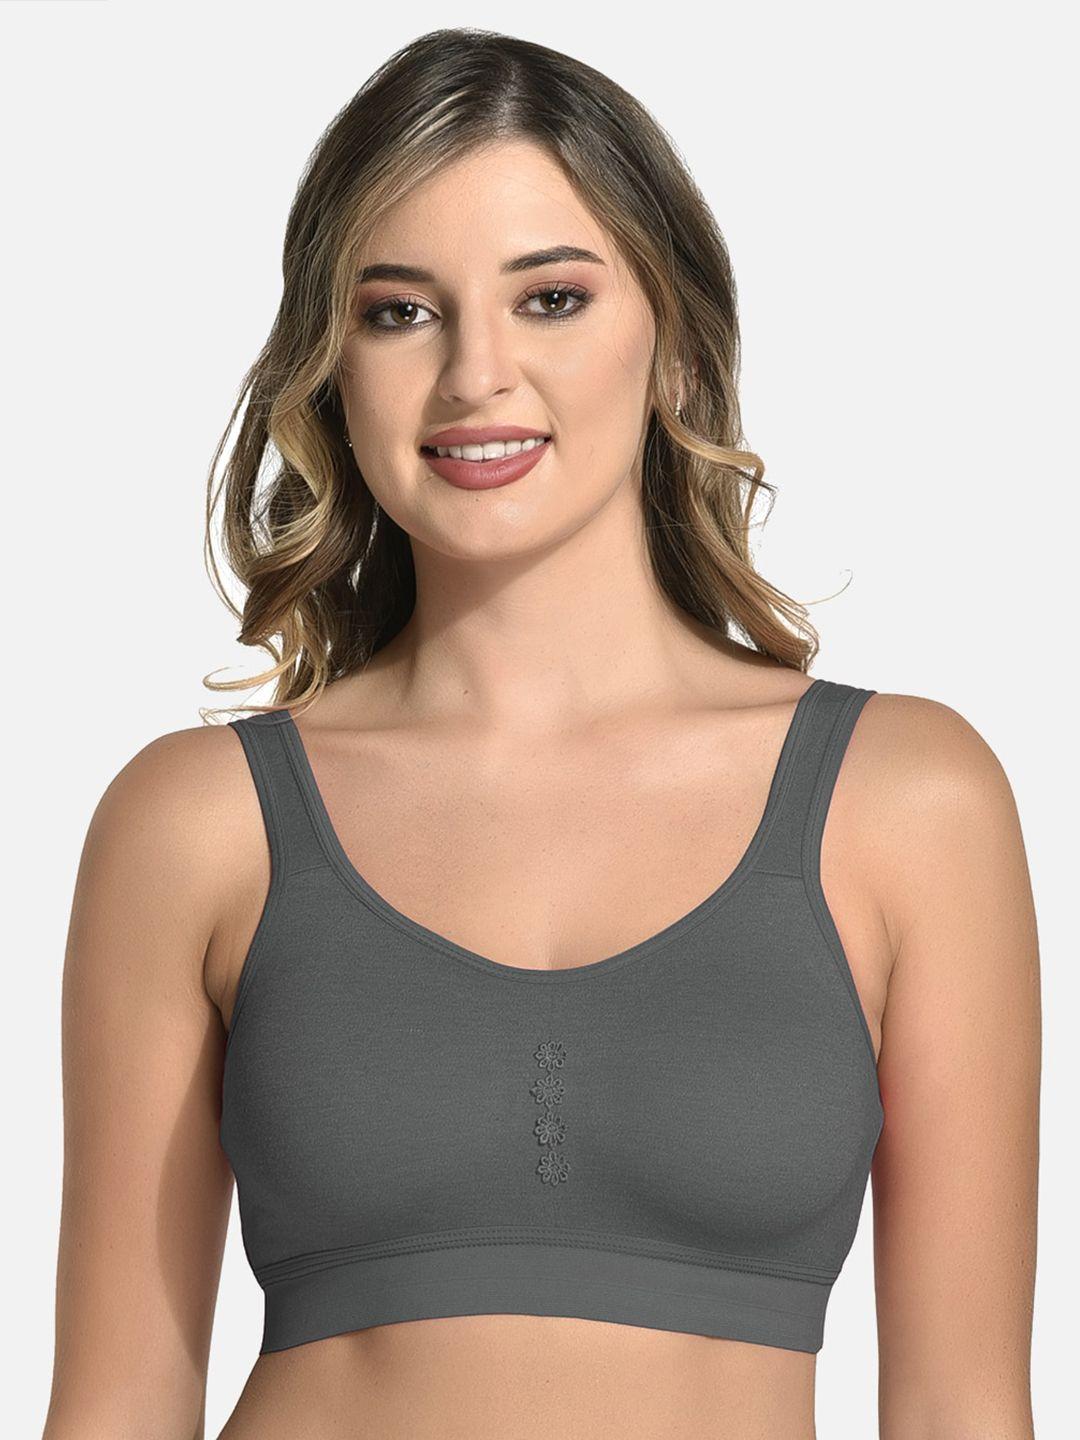 styfun cotton non padded super support bra